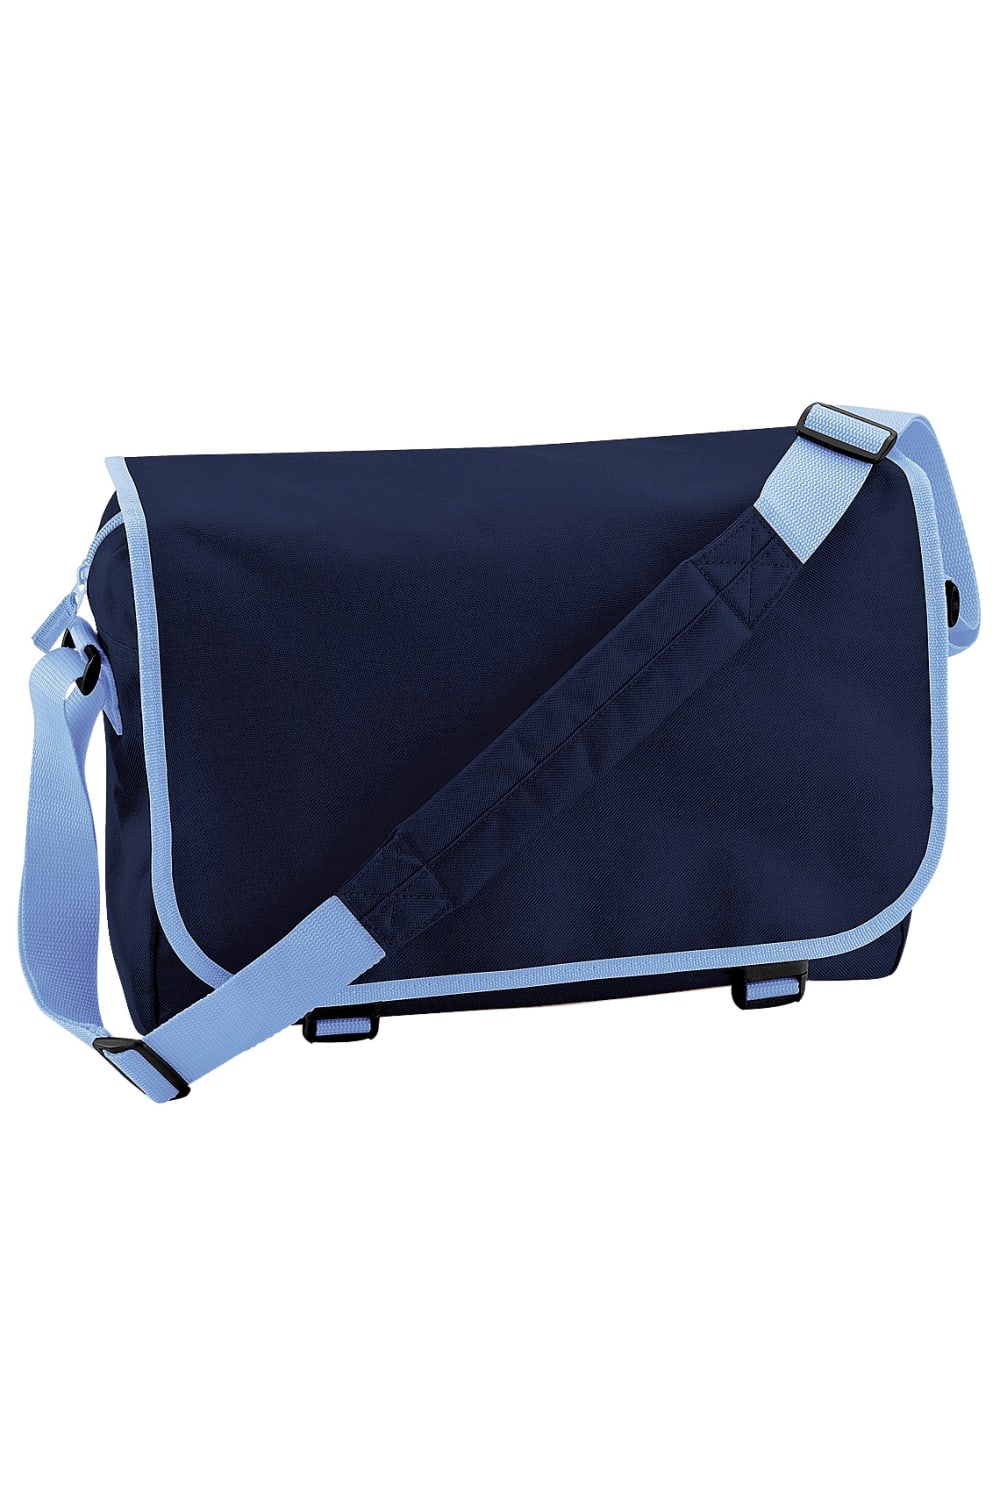 Bagbase Adjustable Messenger Bag (11 Liters) (French Navy/Sky Blue) (One Size)